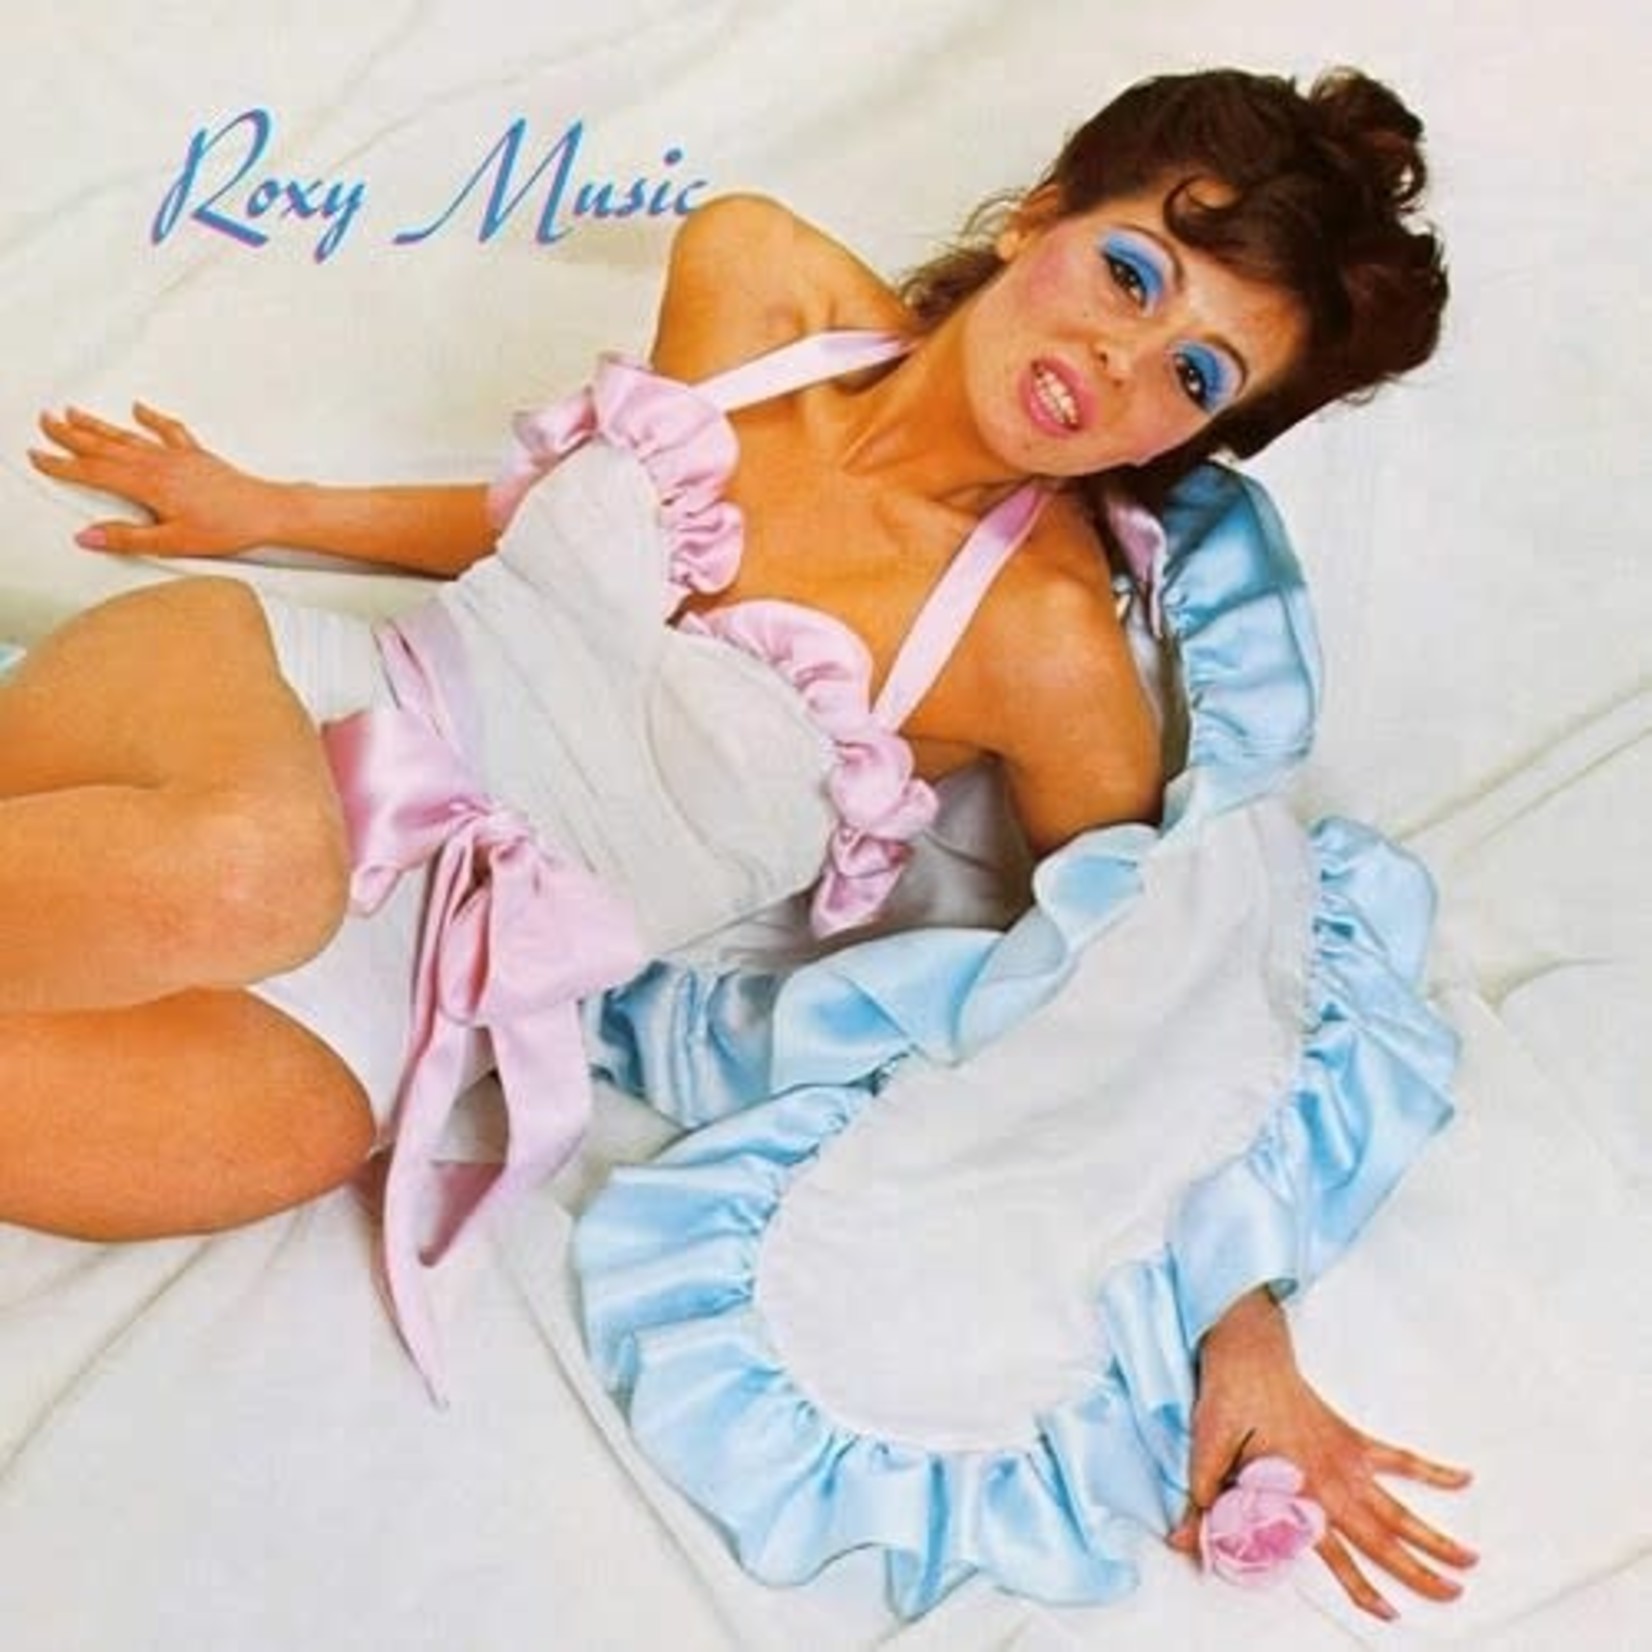 [New] Roxy Music - Roxy Music (Half-speed master, Gloss-laminated finish)